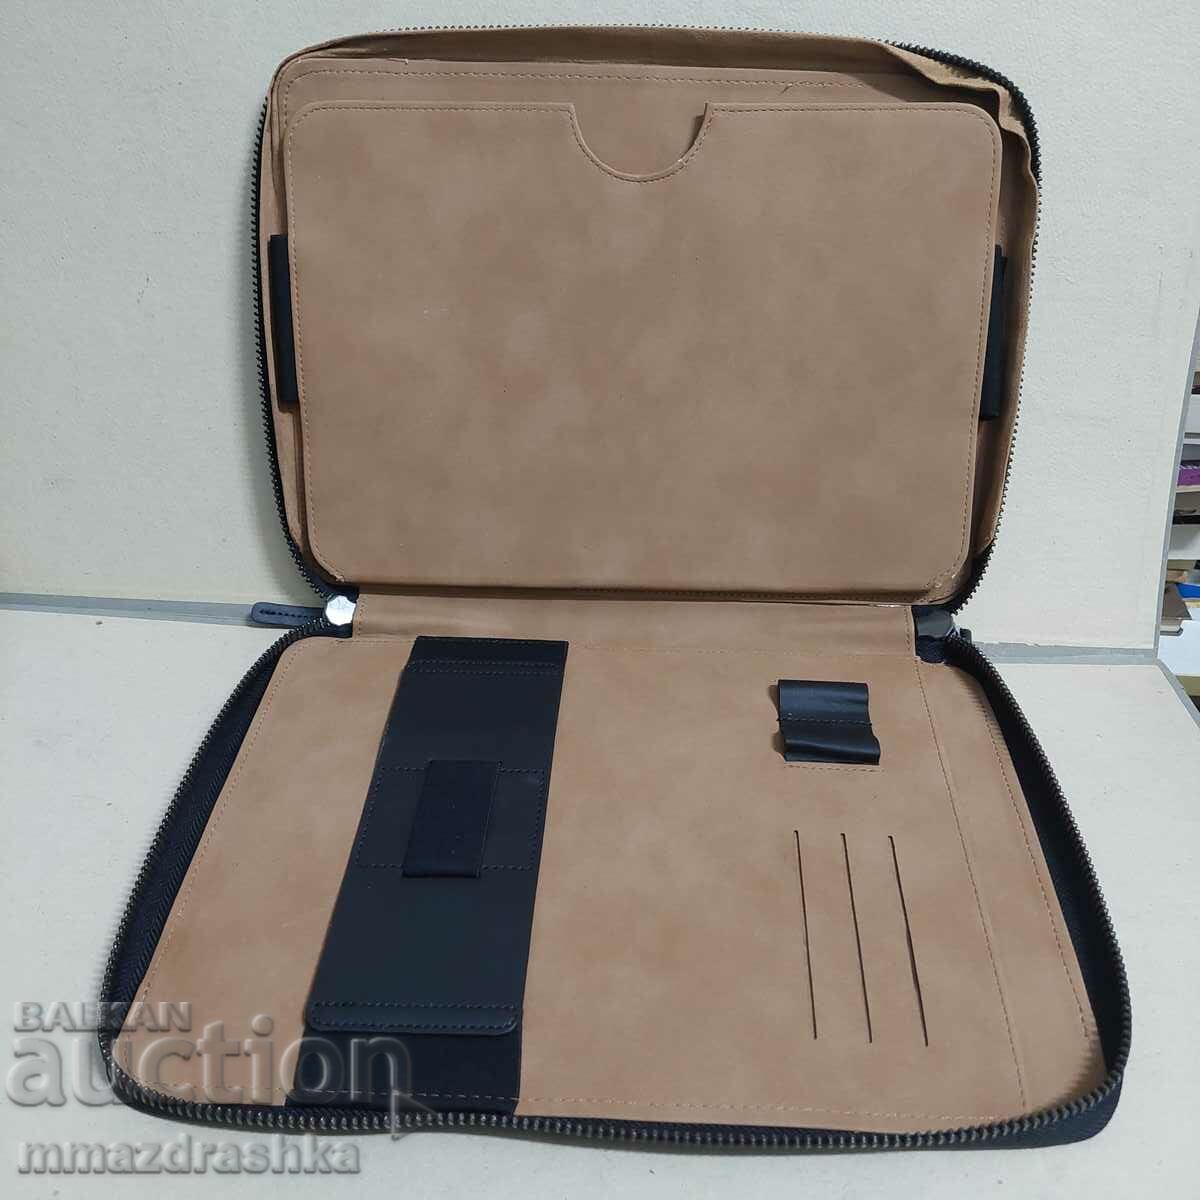 HP laptop bag, leather, organizer